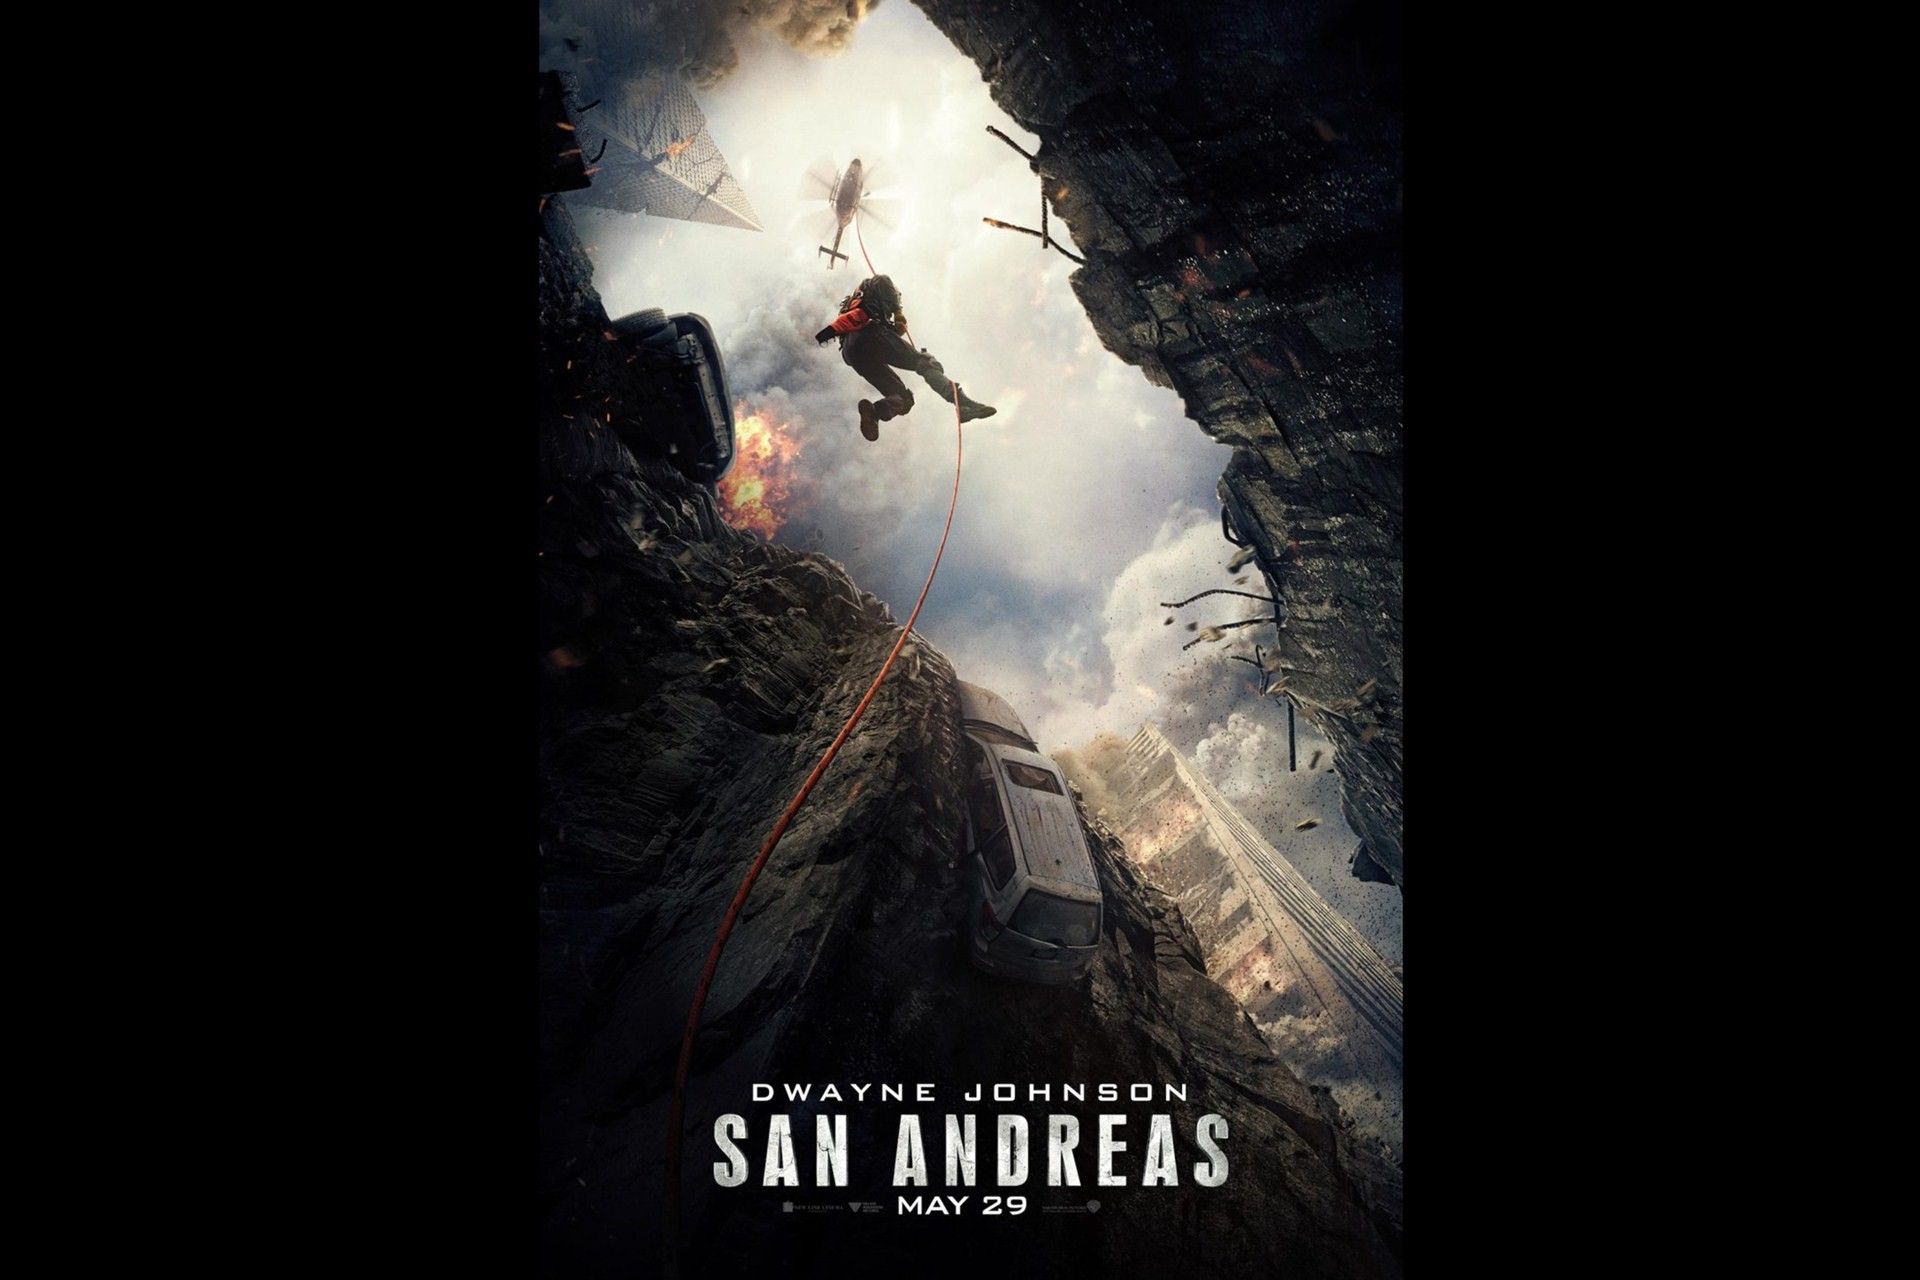 San Andreas Movie Wallpaper